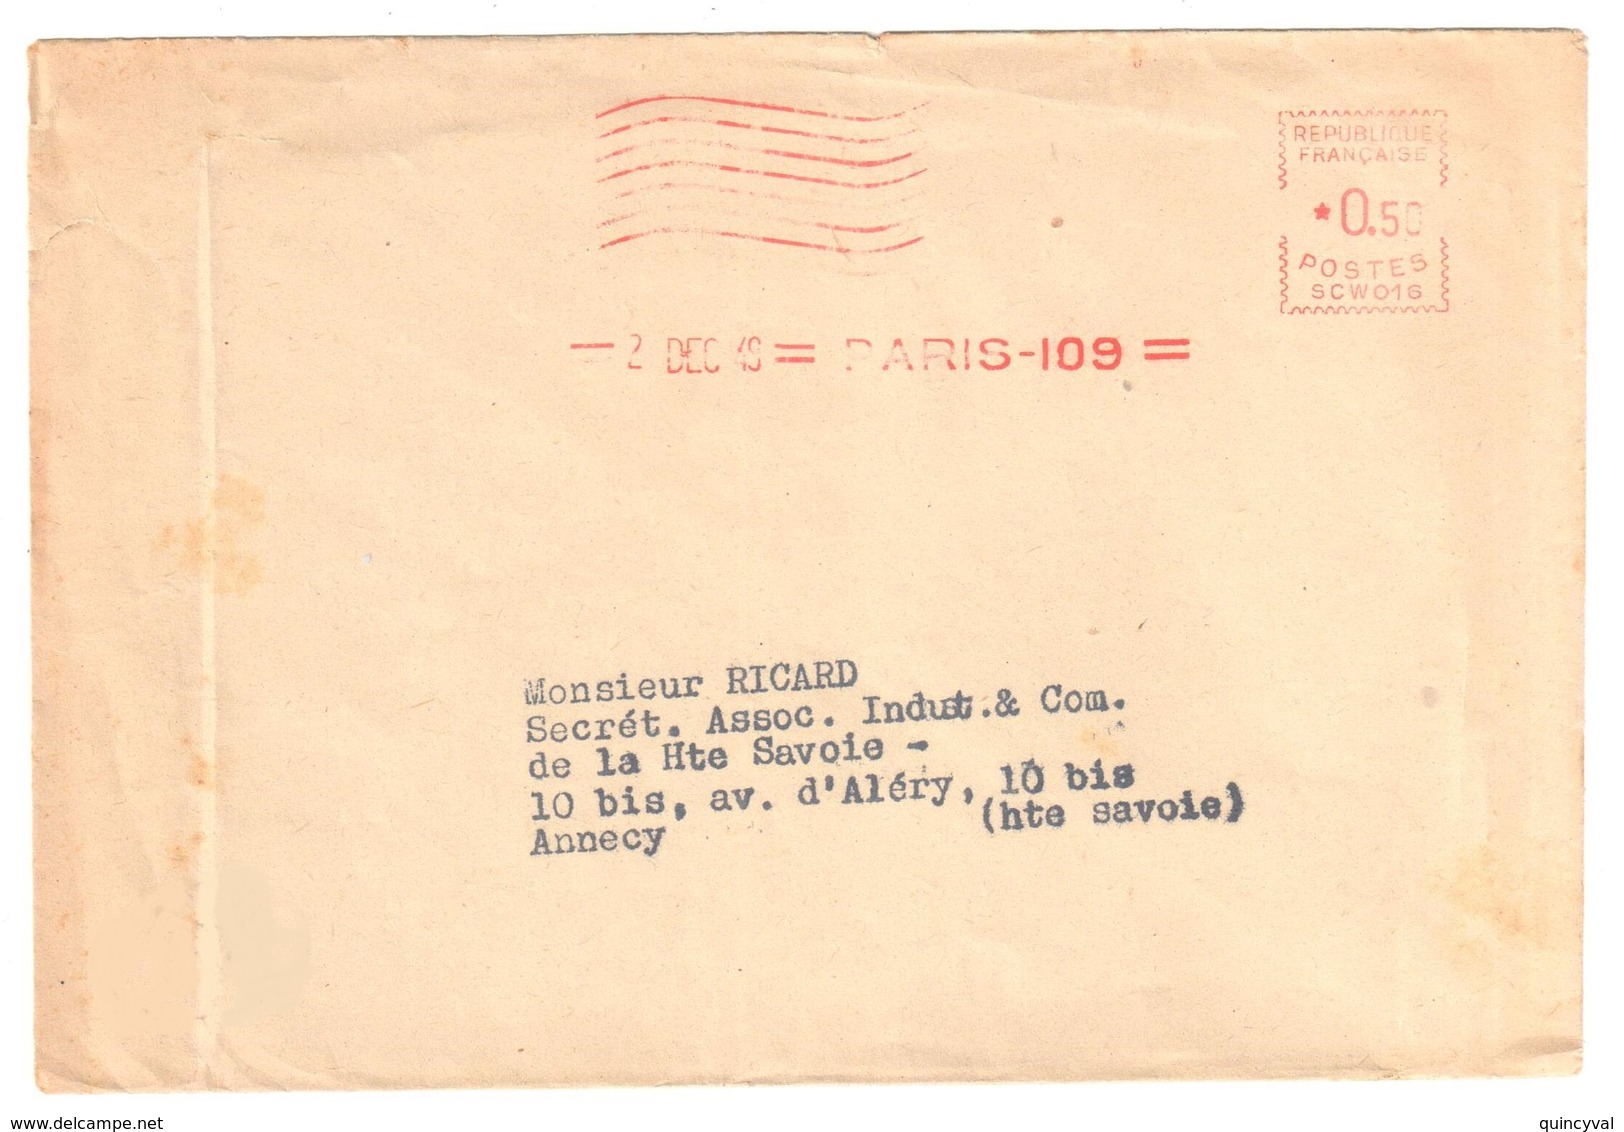 PARIS 109 Enveloppe Journal Sous Enveloppe 50c Ob 2 12 1949  EMA SCW016 - EMA (Empreintes Machines à Affranchir)